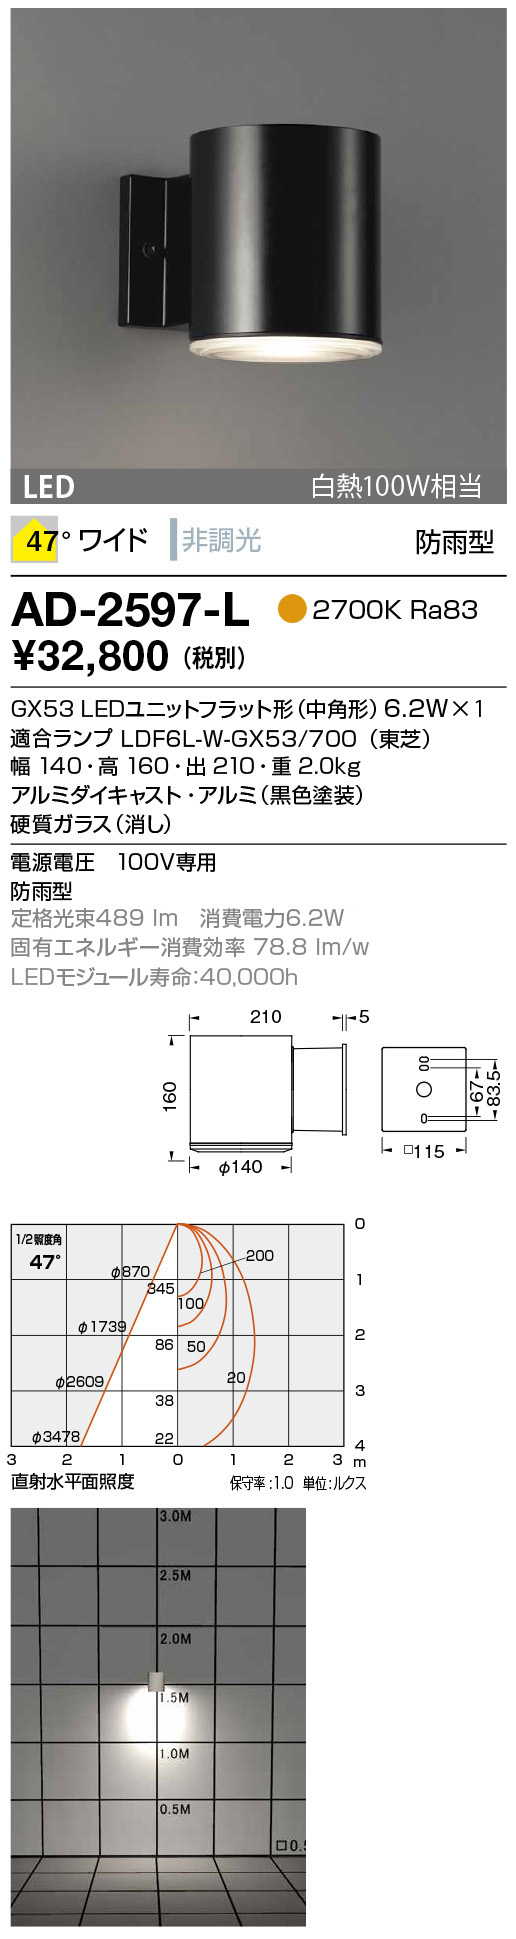 AD-2597-L(山田照明) 商品詳細 ～ 照明器具・換気扇他、電設資材販売のブライト